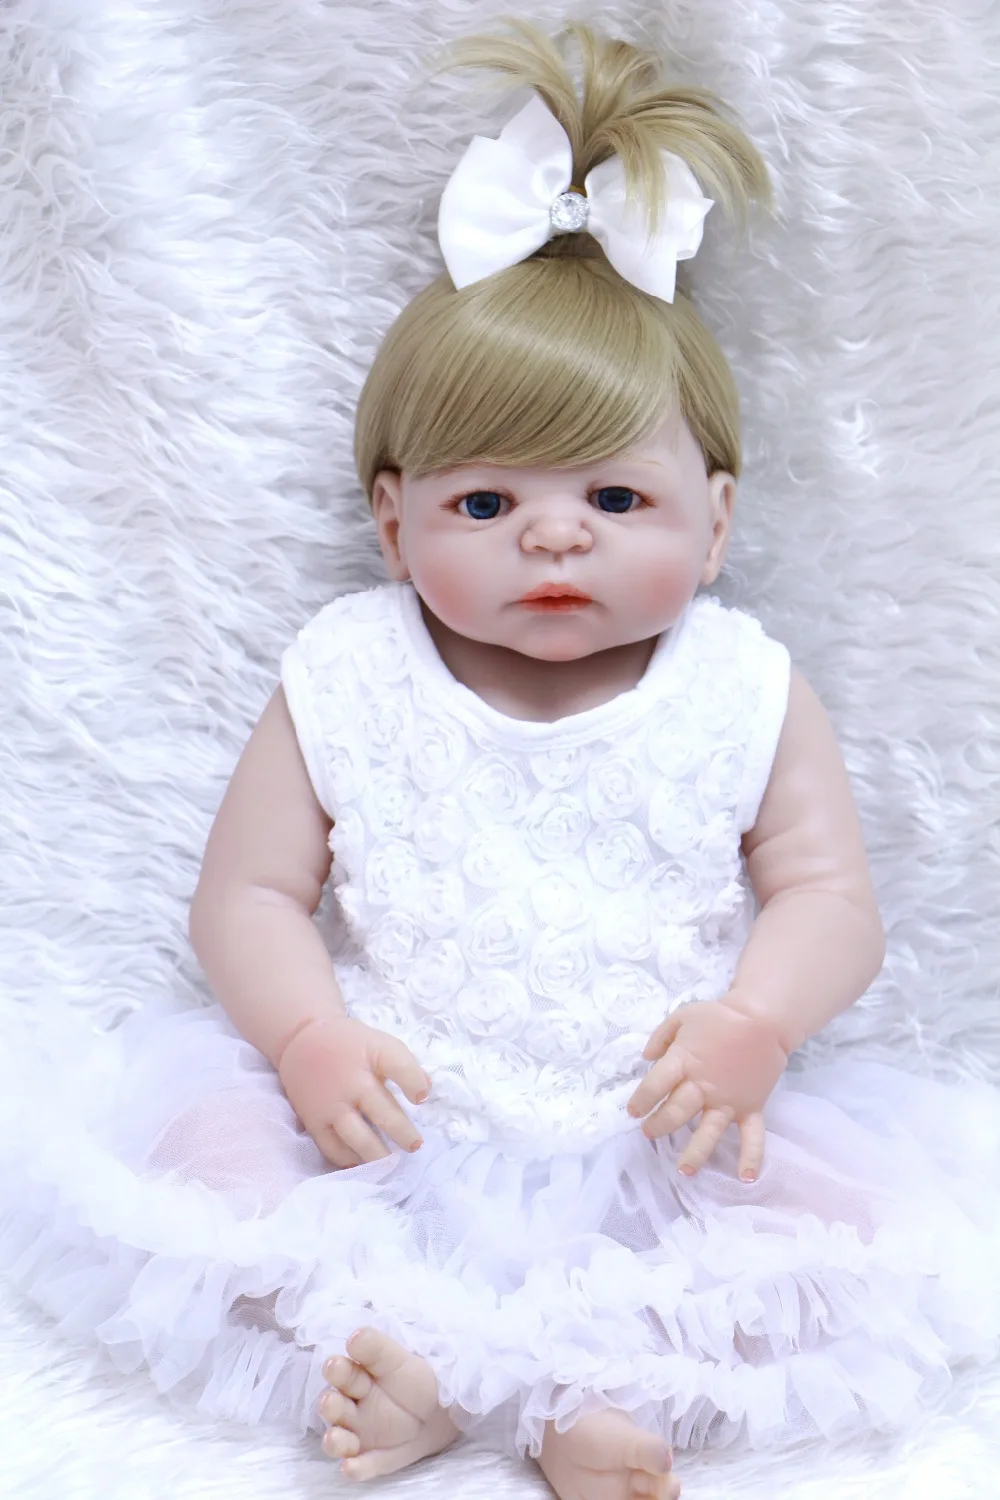 55cm New Full Body Silicone Reborn Baby Doll Toys Newborn Girl Baby Doll Christmas Gift Birthday Gift Bathe Toy Girls Brinquedos